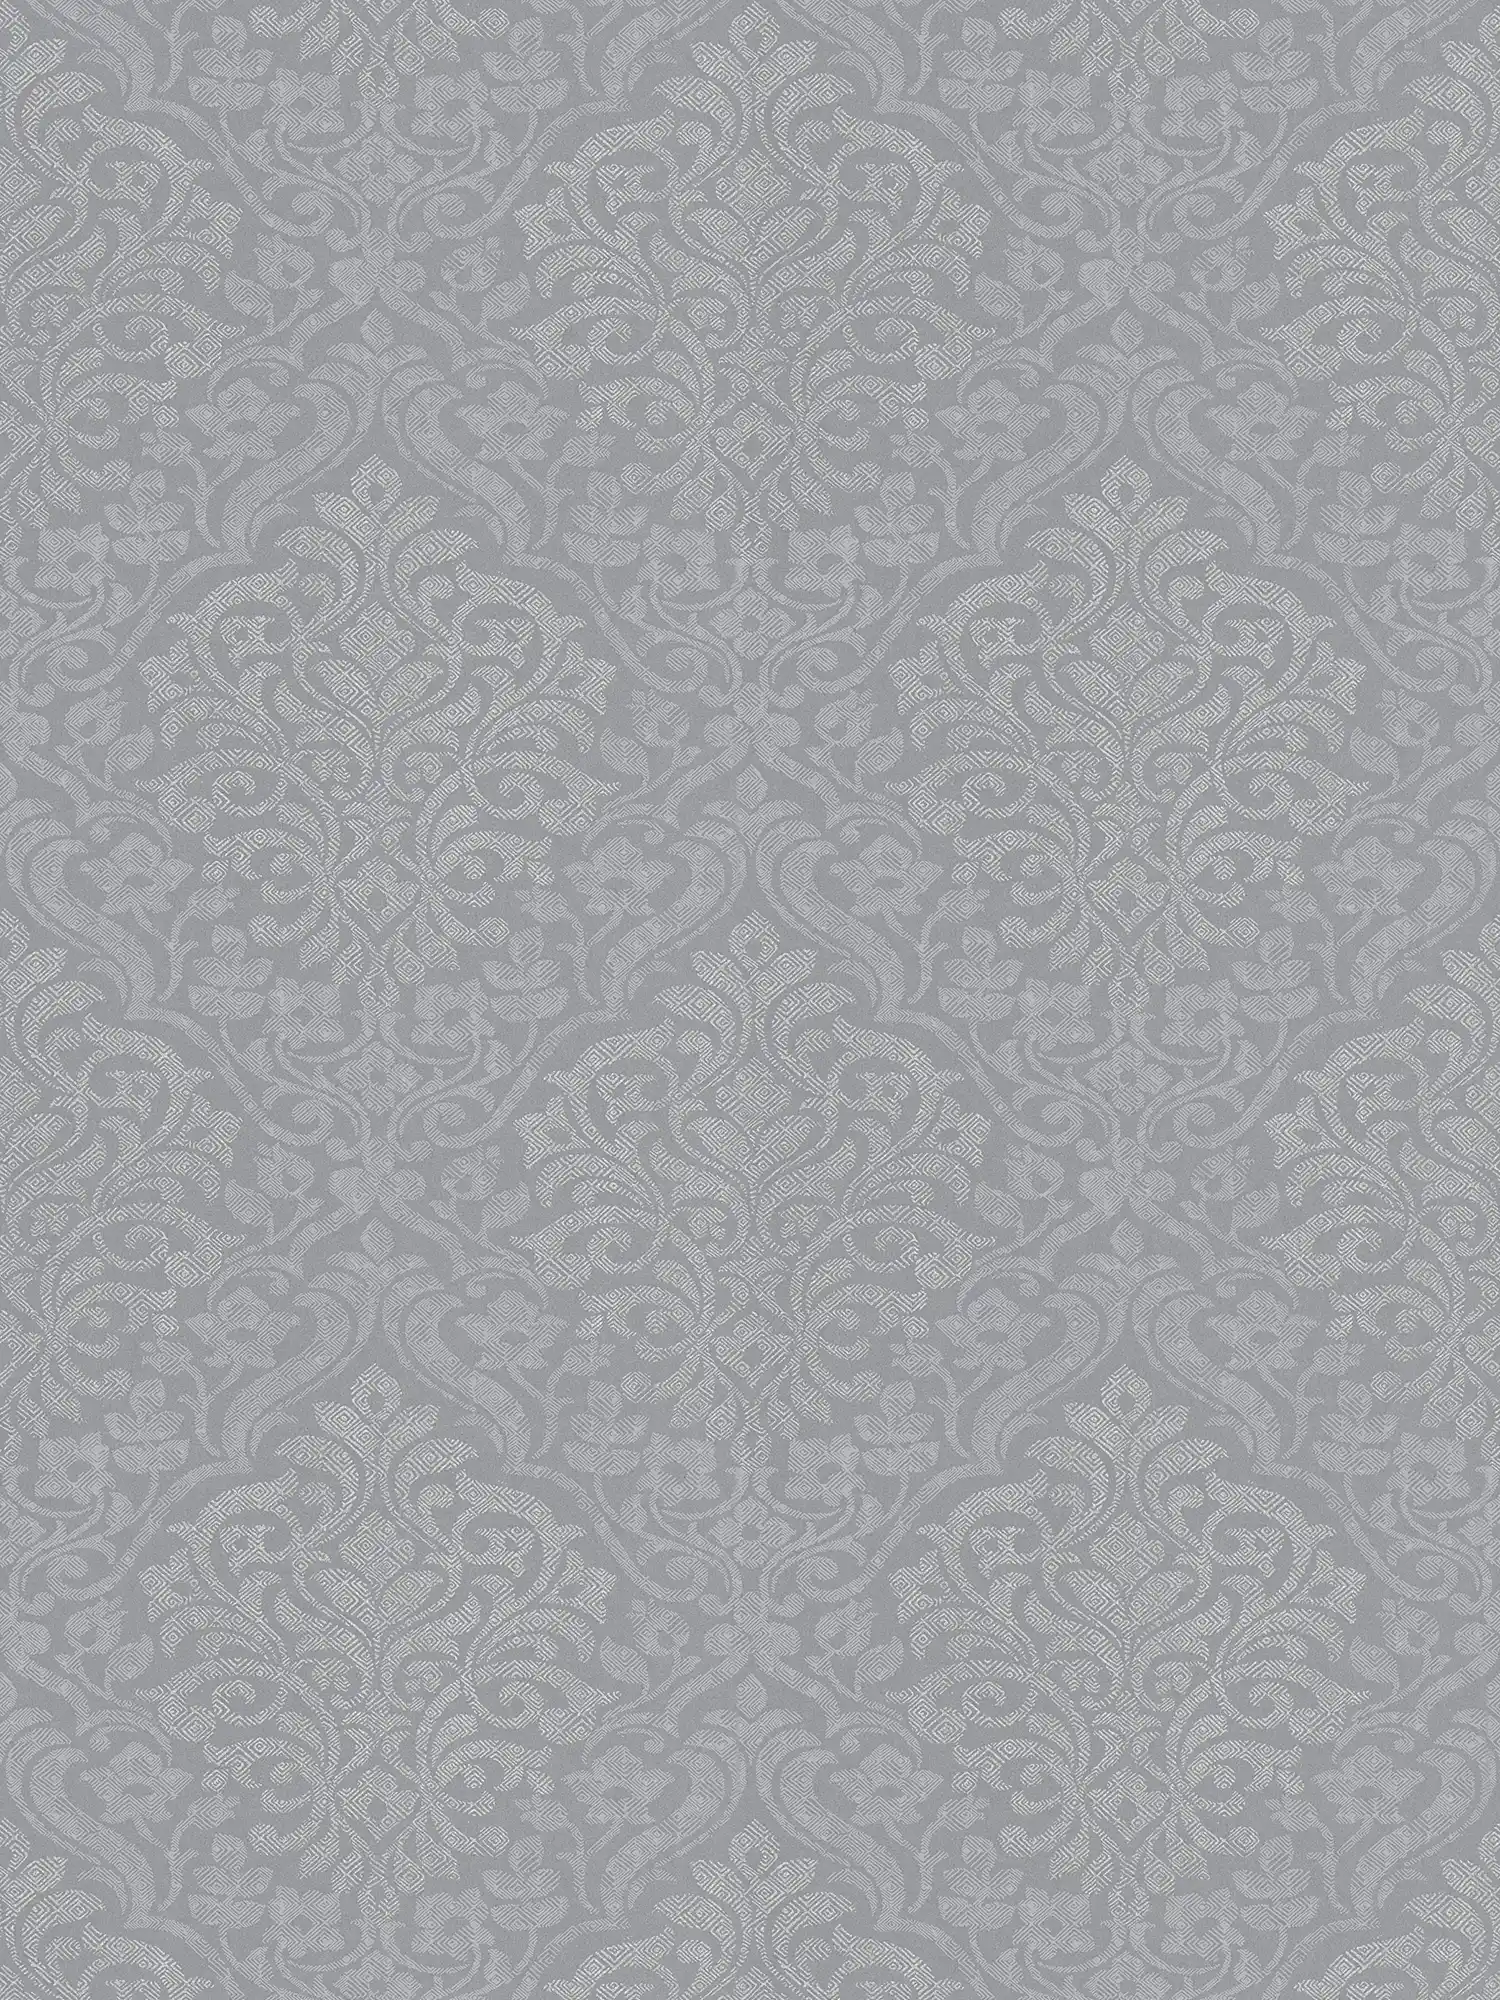         Florale Ornamenttapete Rautenmuster im Ethno-Stil – Grau, Silber
    